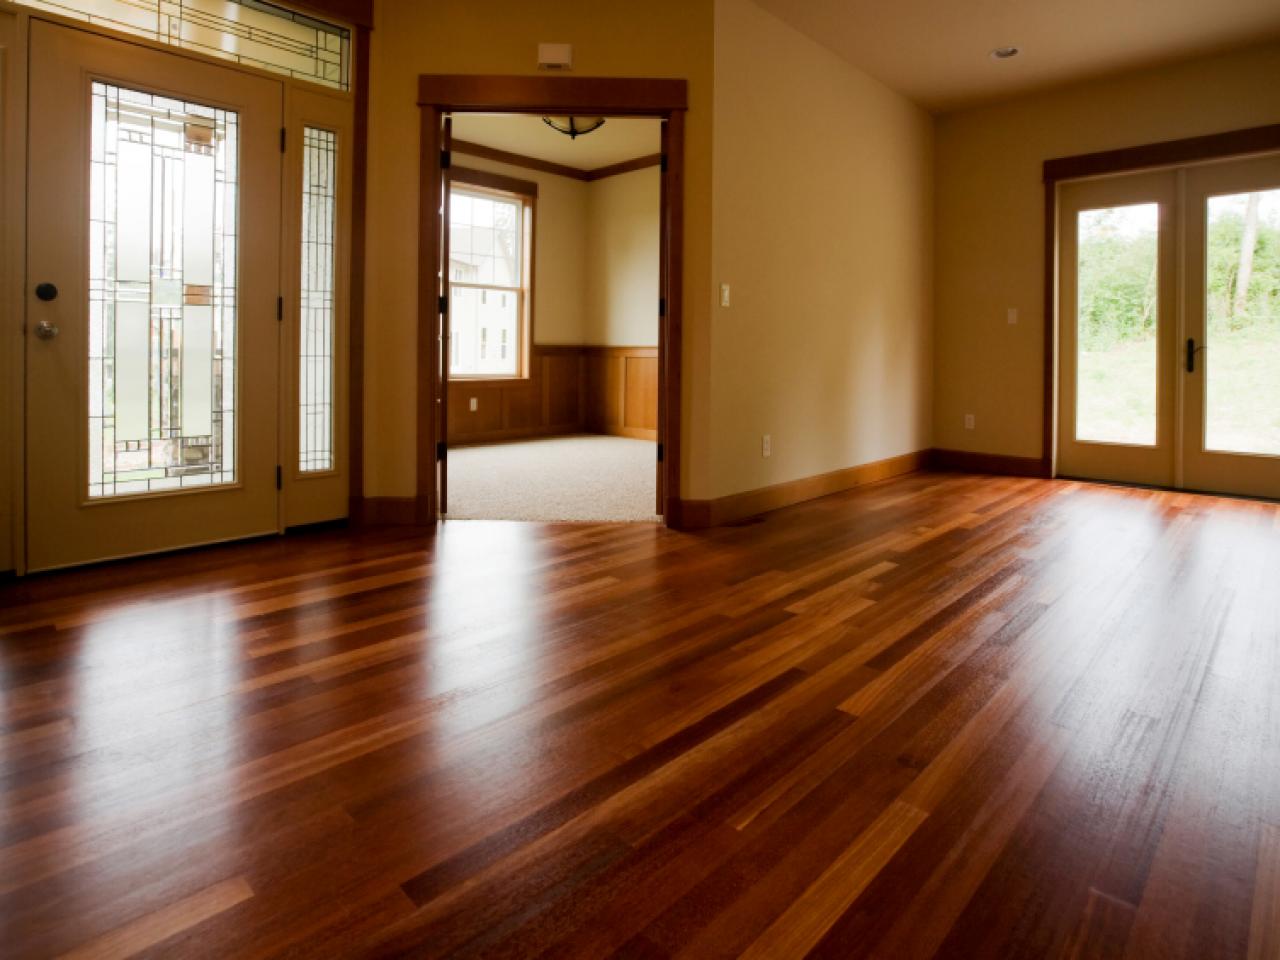 Cleaning Tile Wood And Vinyl Floors, Carpet Tiles On Hardwood Floors